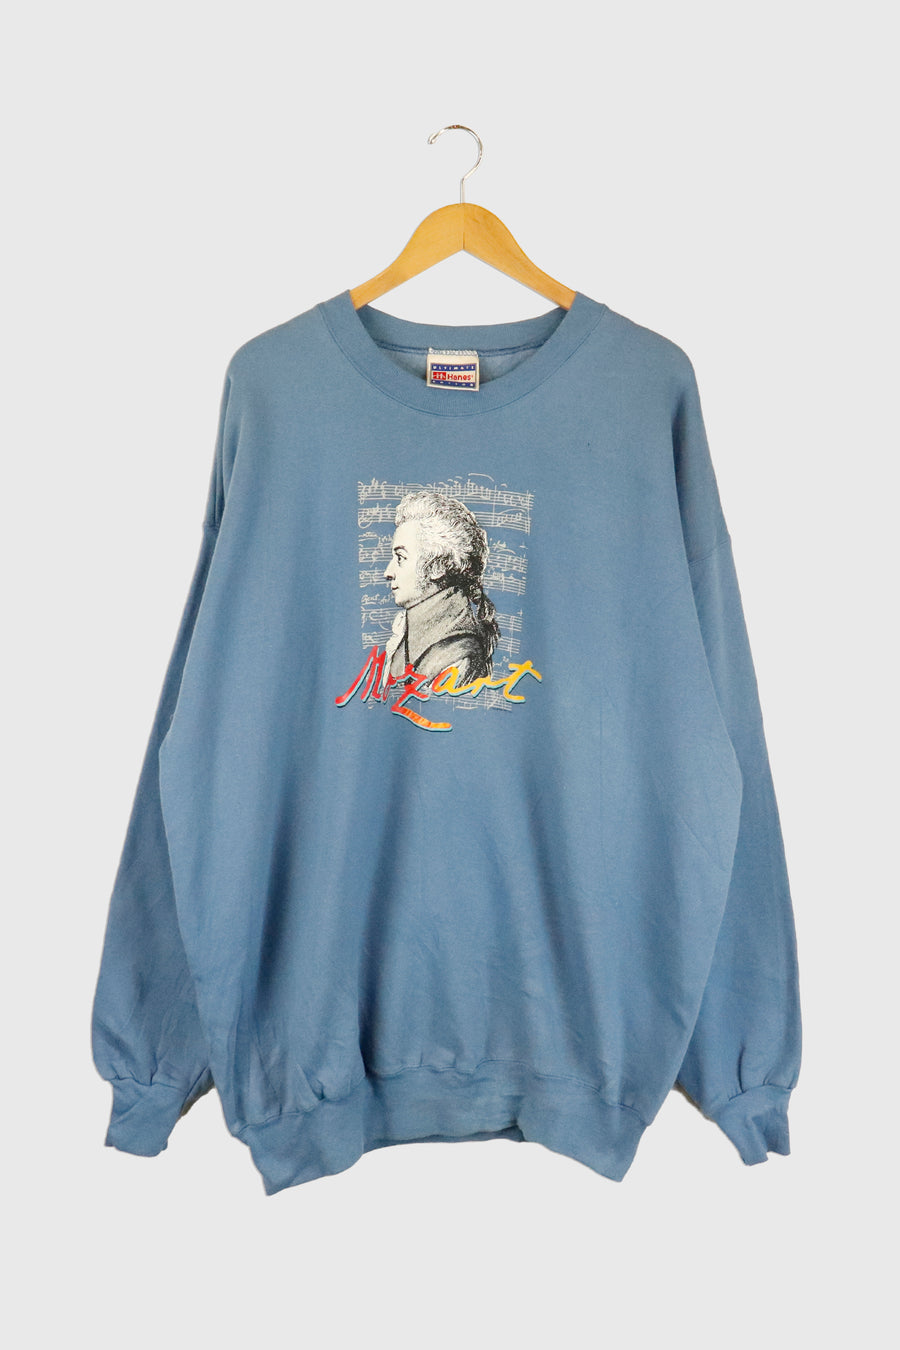 Vintage 1997 Mozart Graphic Sweatshirt Sz XL